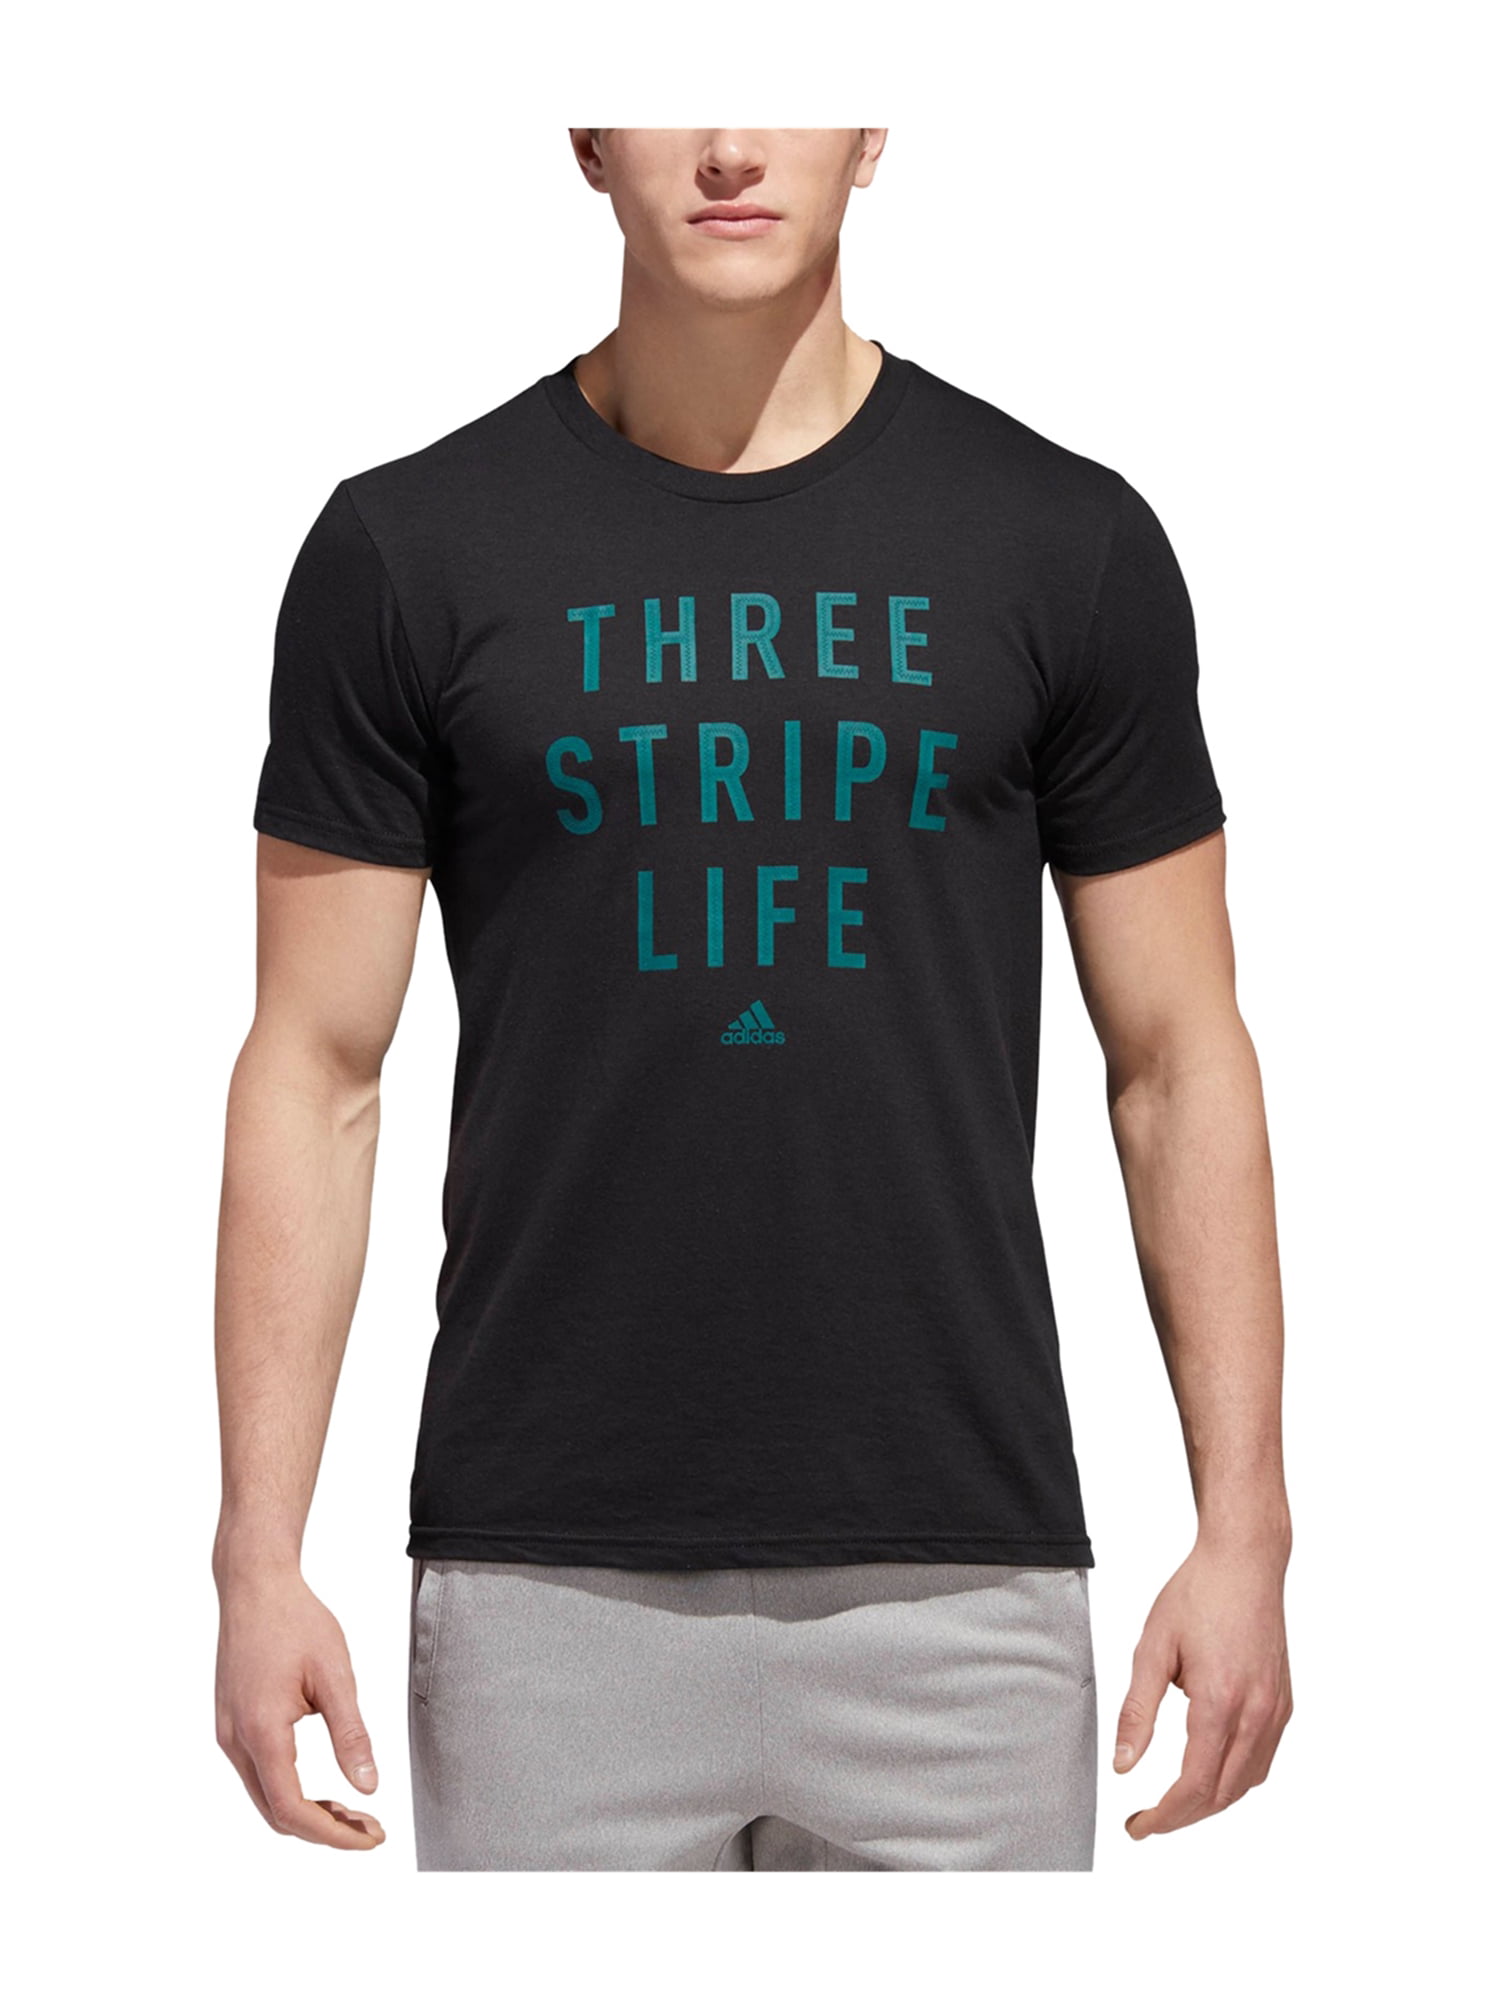 adidas 3 stripe life shirt